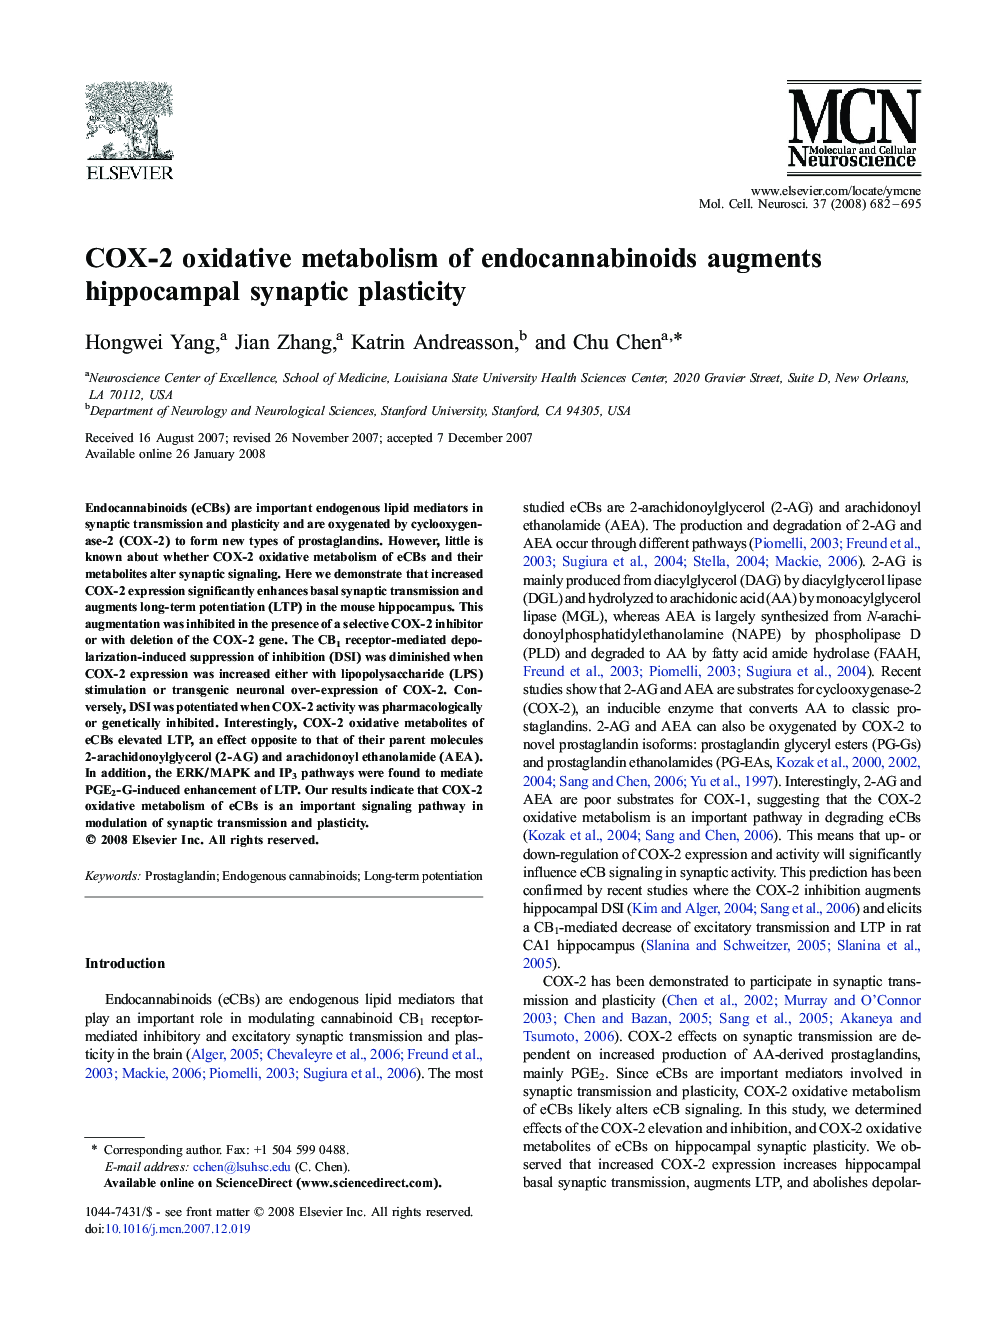 COX-2 oxidative metabolism of endocannabinoids augments hippocampal synaptic plasticity